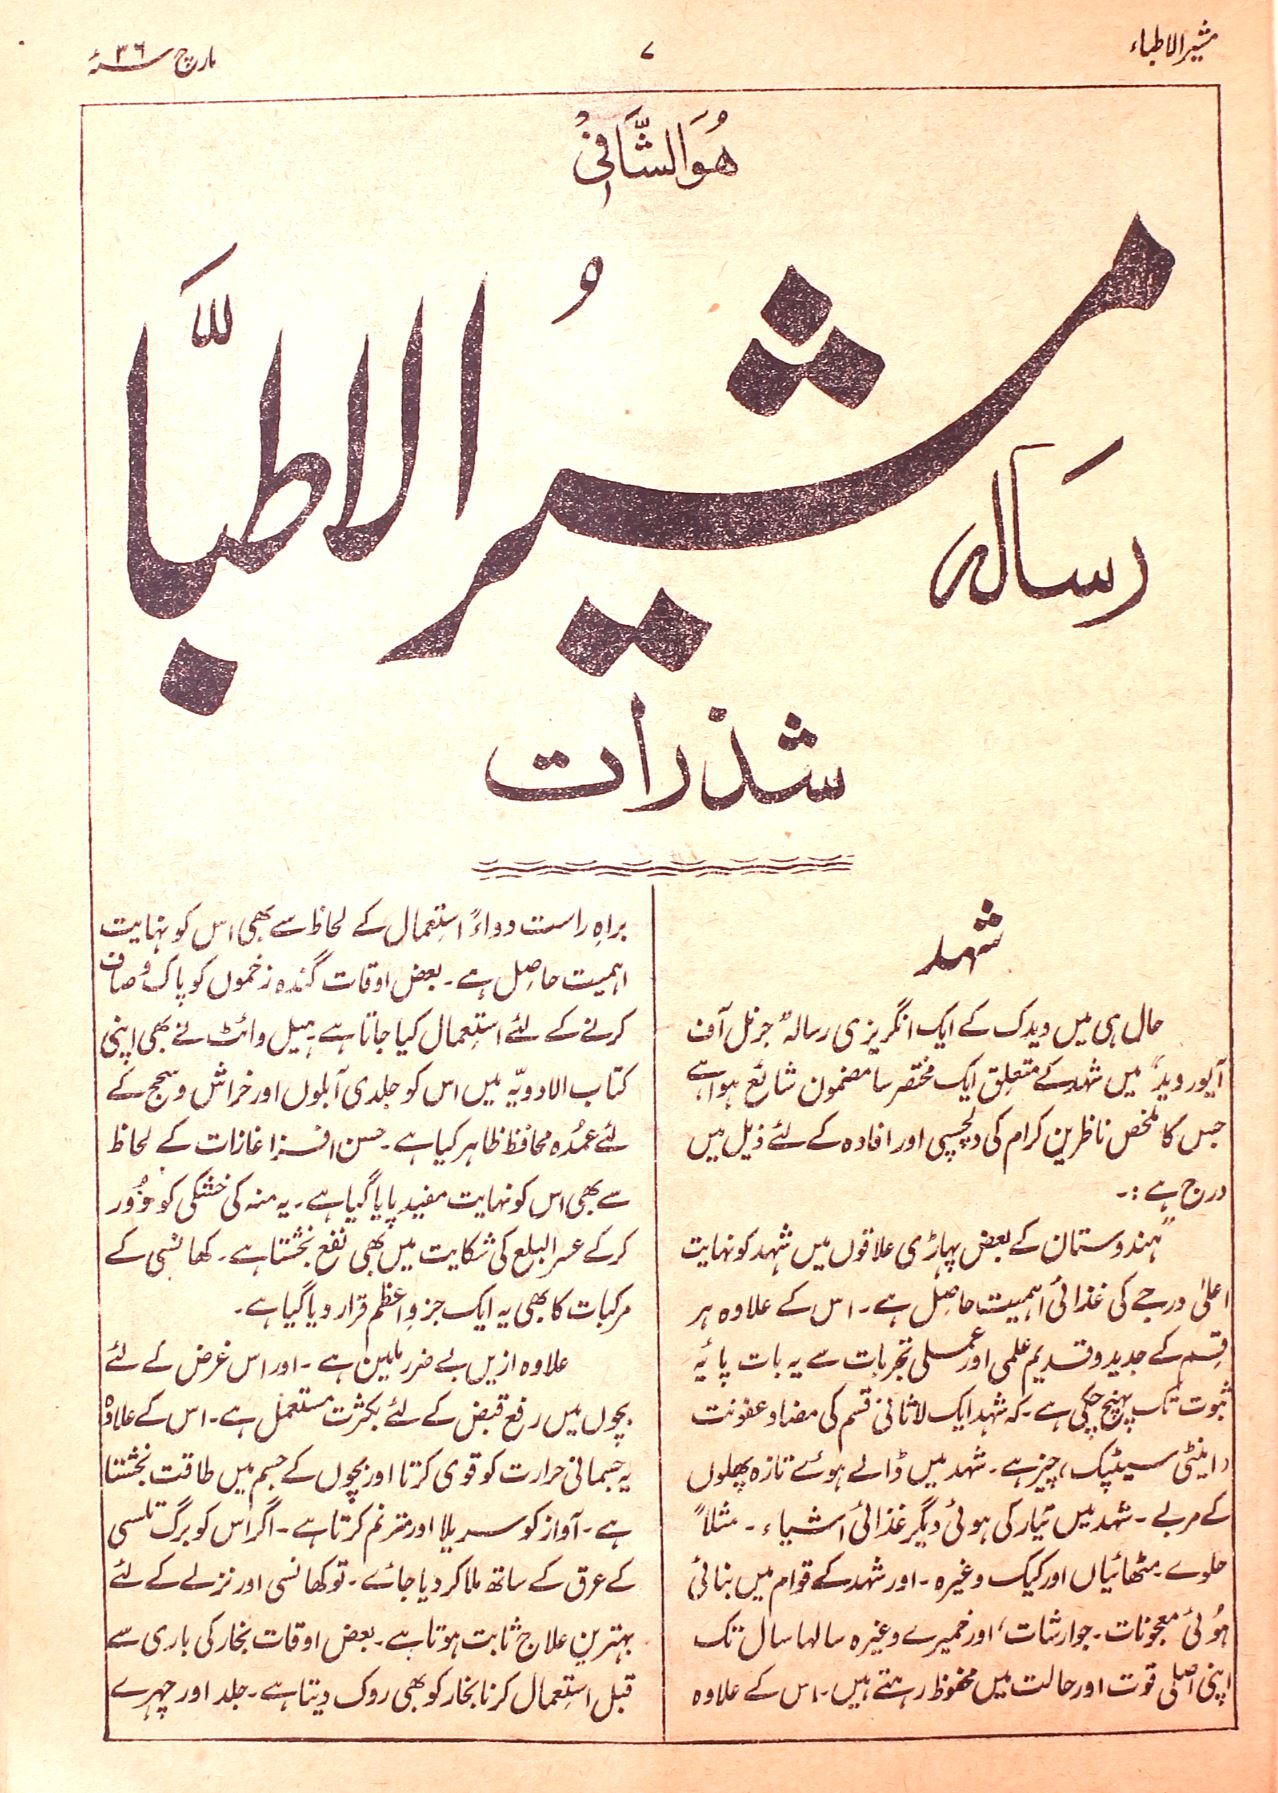 Masheer Ul Attiba Jild 14 No 6 March 1936-GNTC